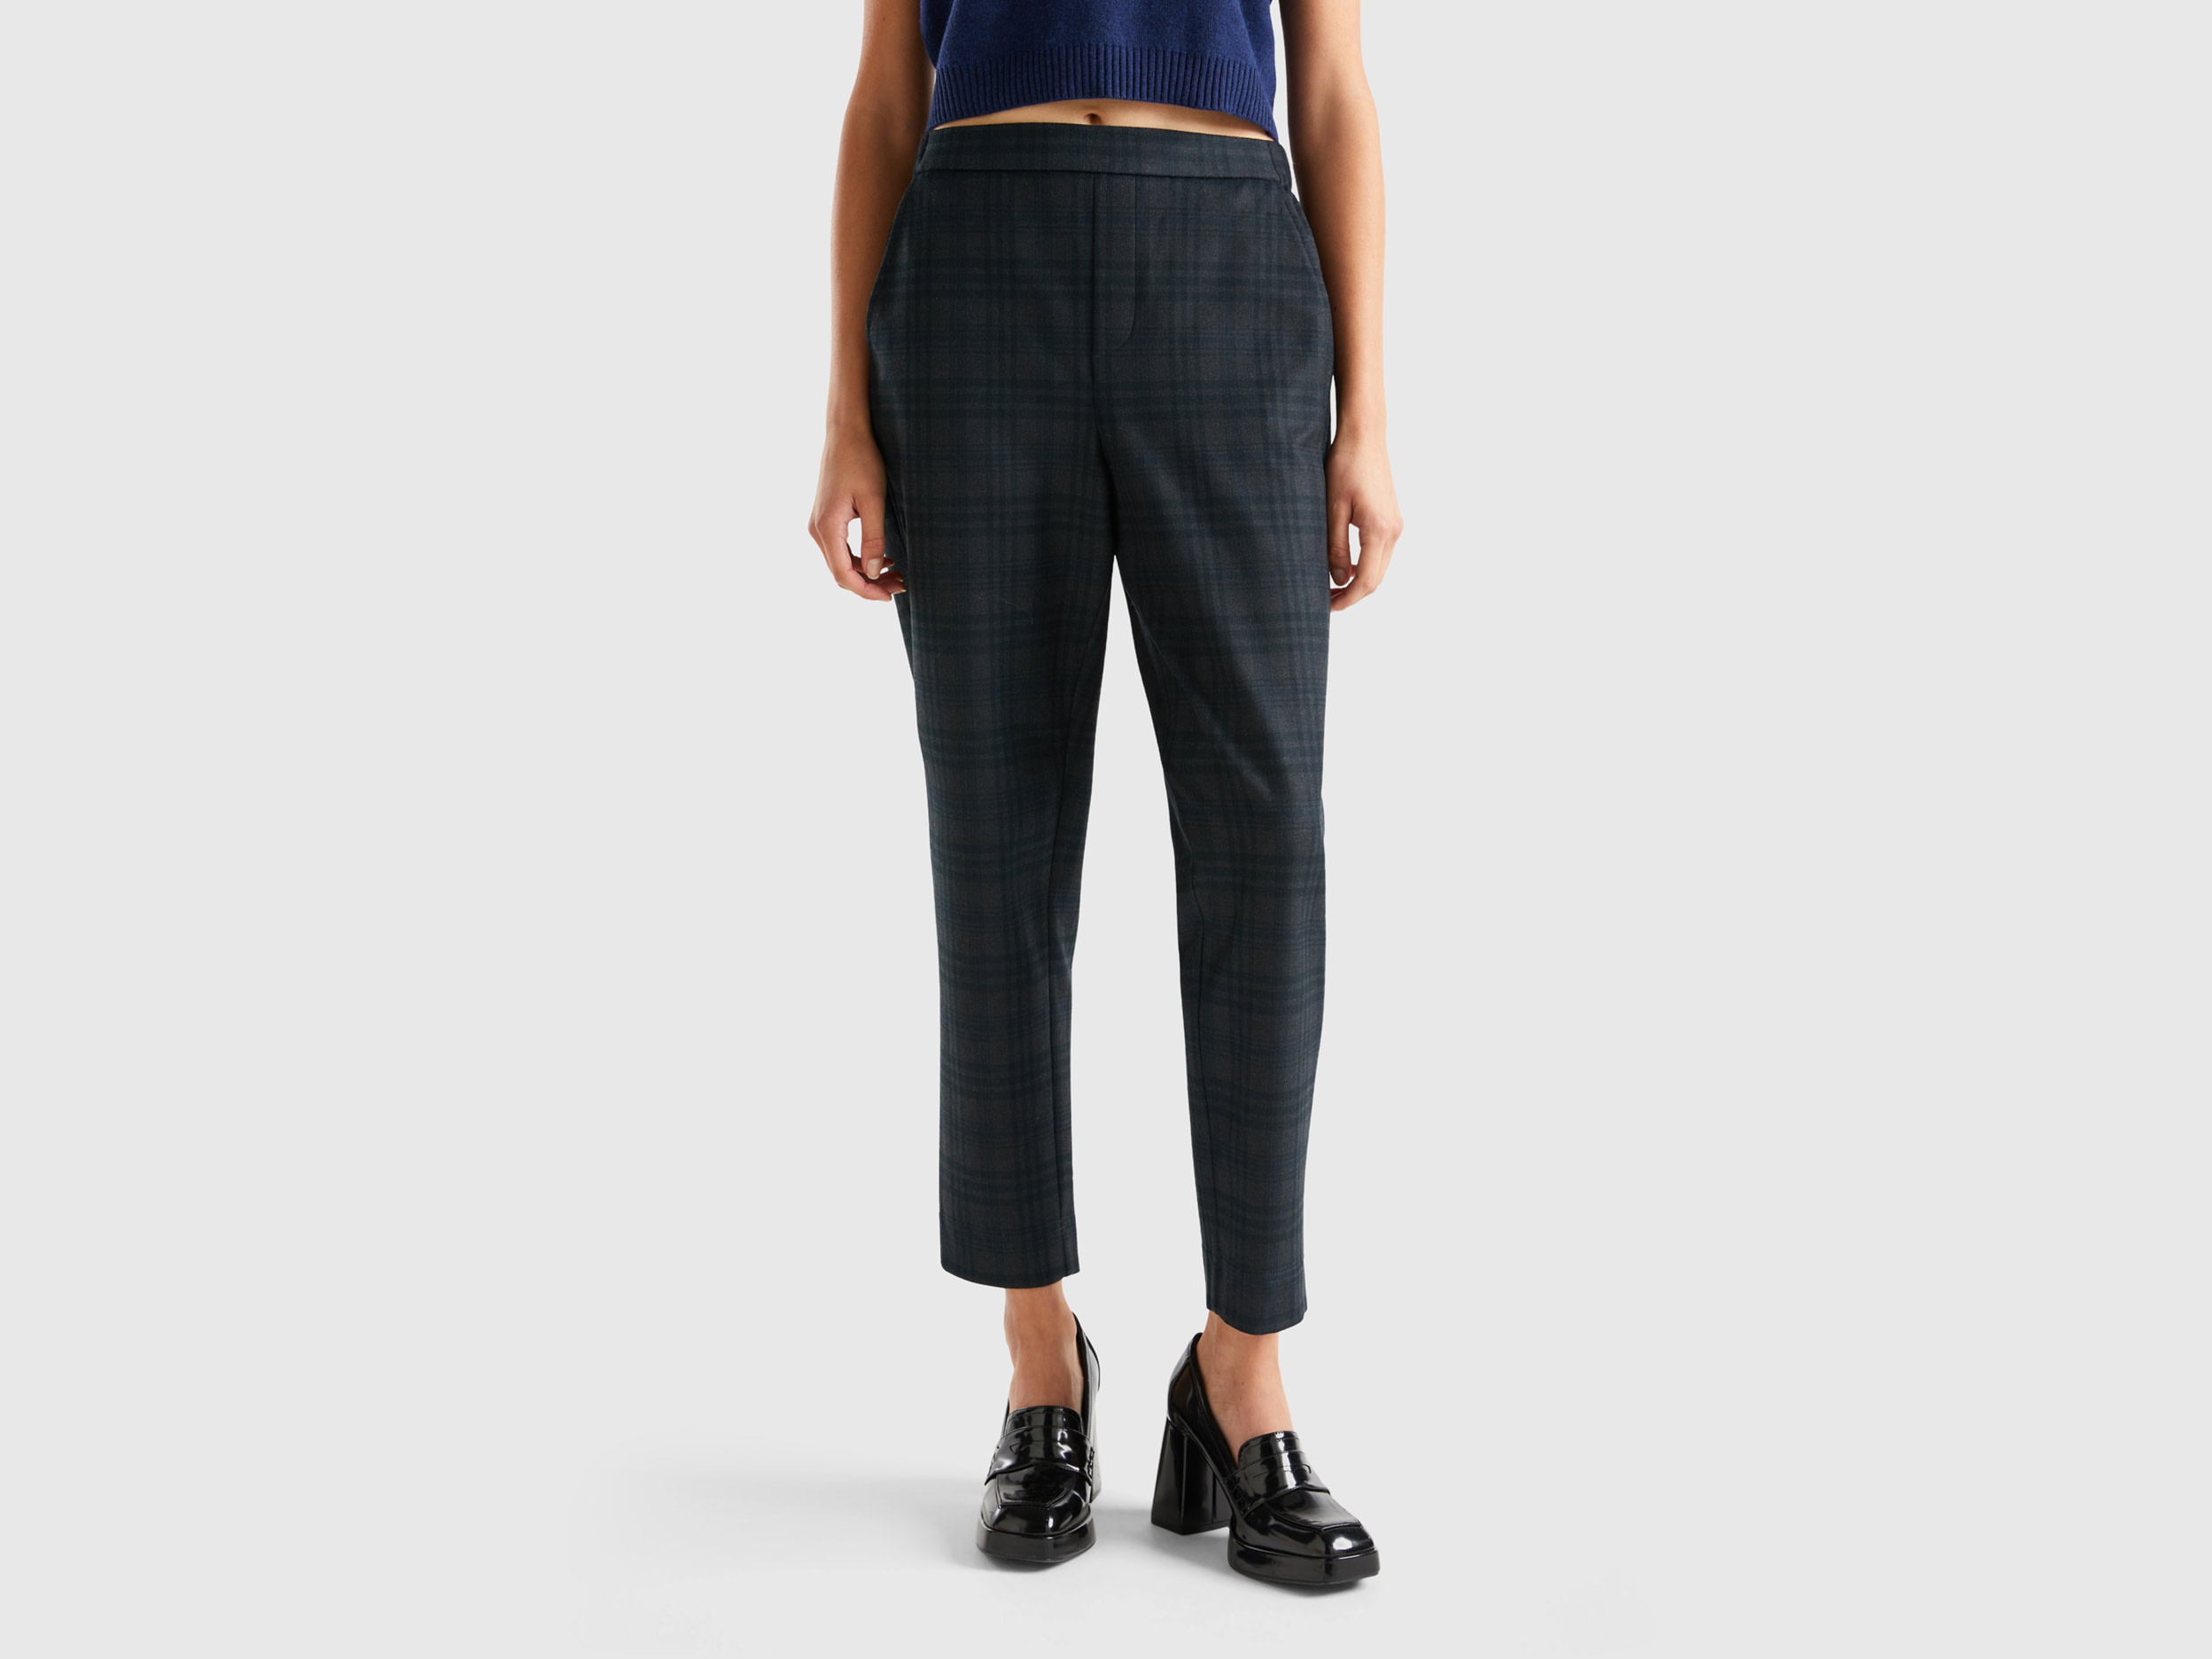 Benetton, Patterned Pants With Elastic Waist, size XL, Black, Women